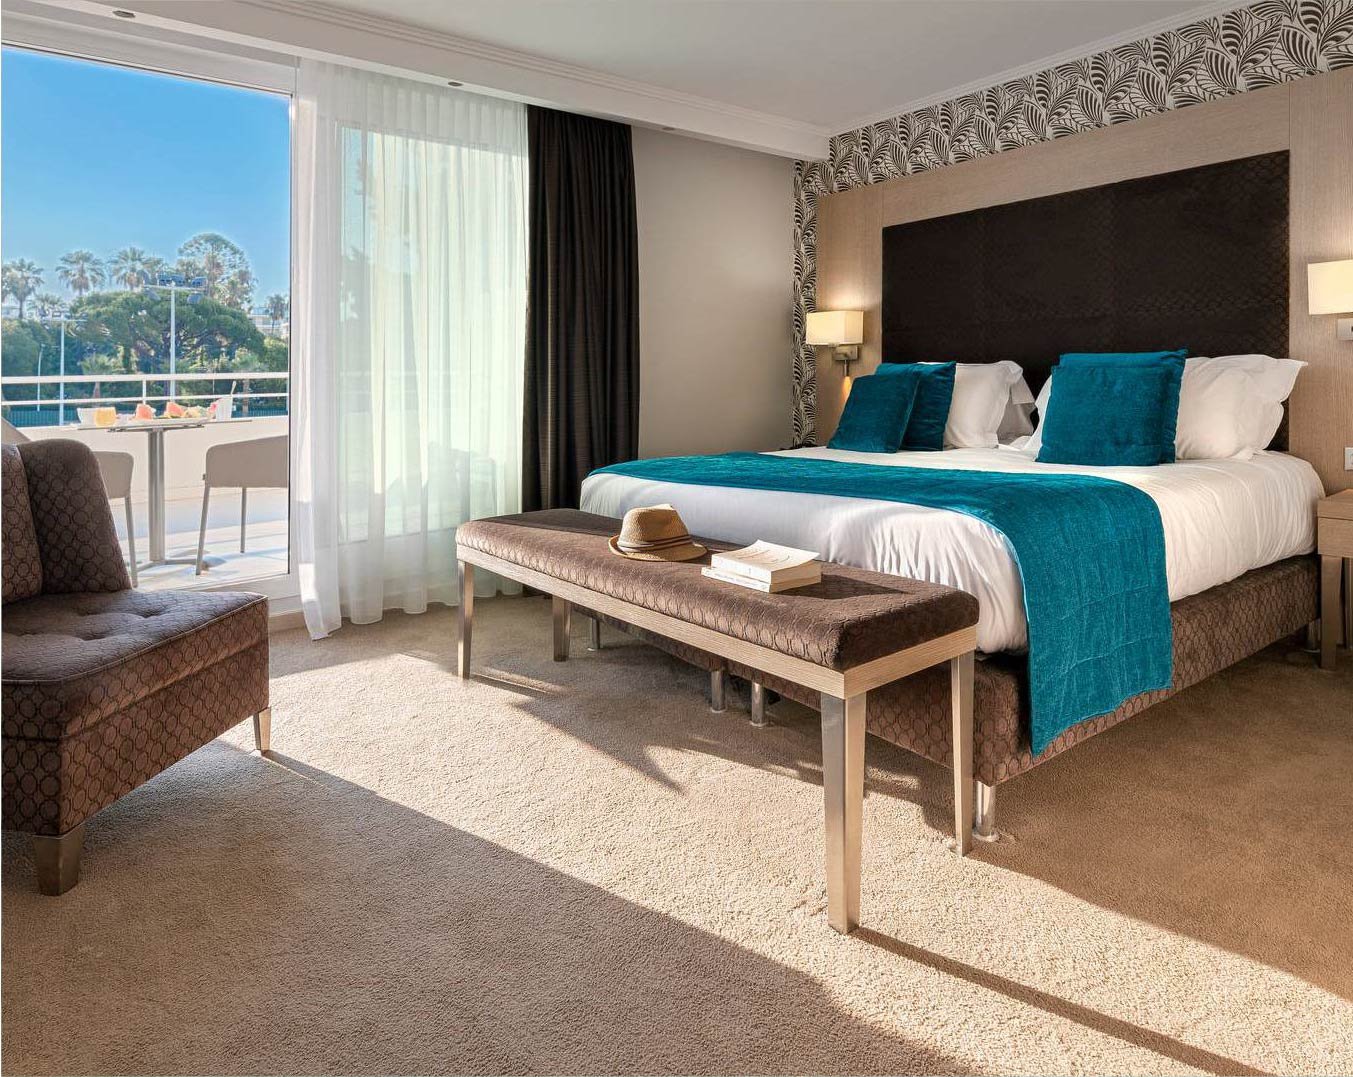 Juliana Hotels combines luxury with a modern, digital guest journey Website body Image 1 1076 x 1352-50